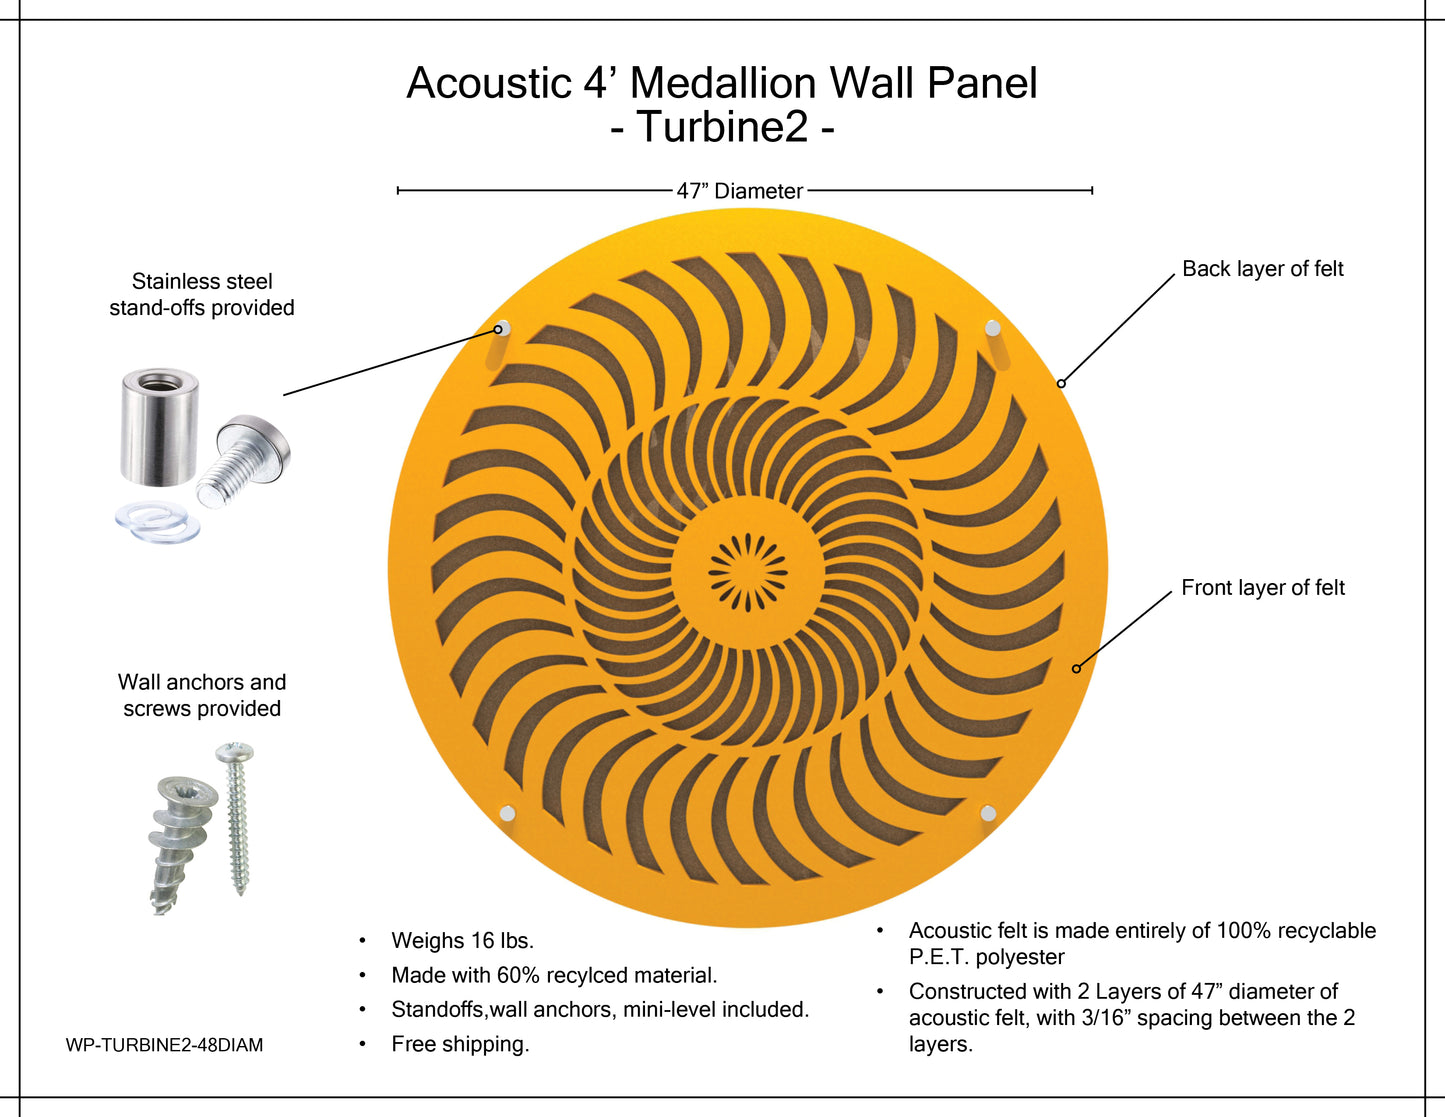 Medallion Acoustic Wall Panel - Turbine2